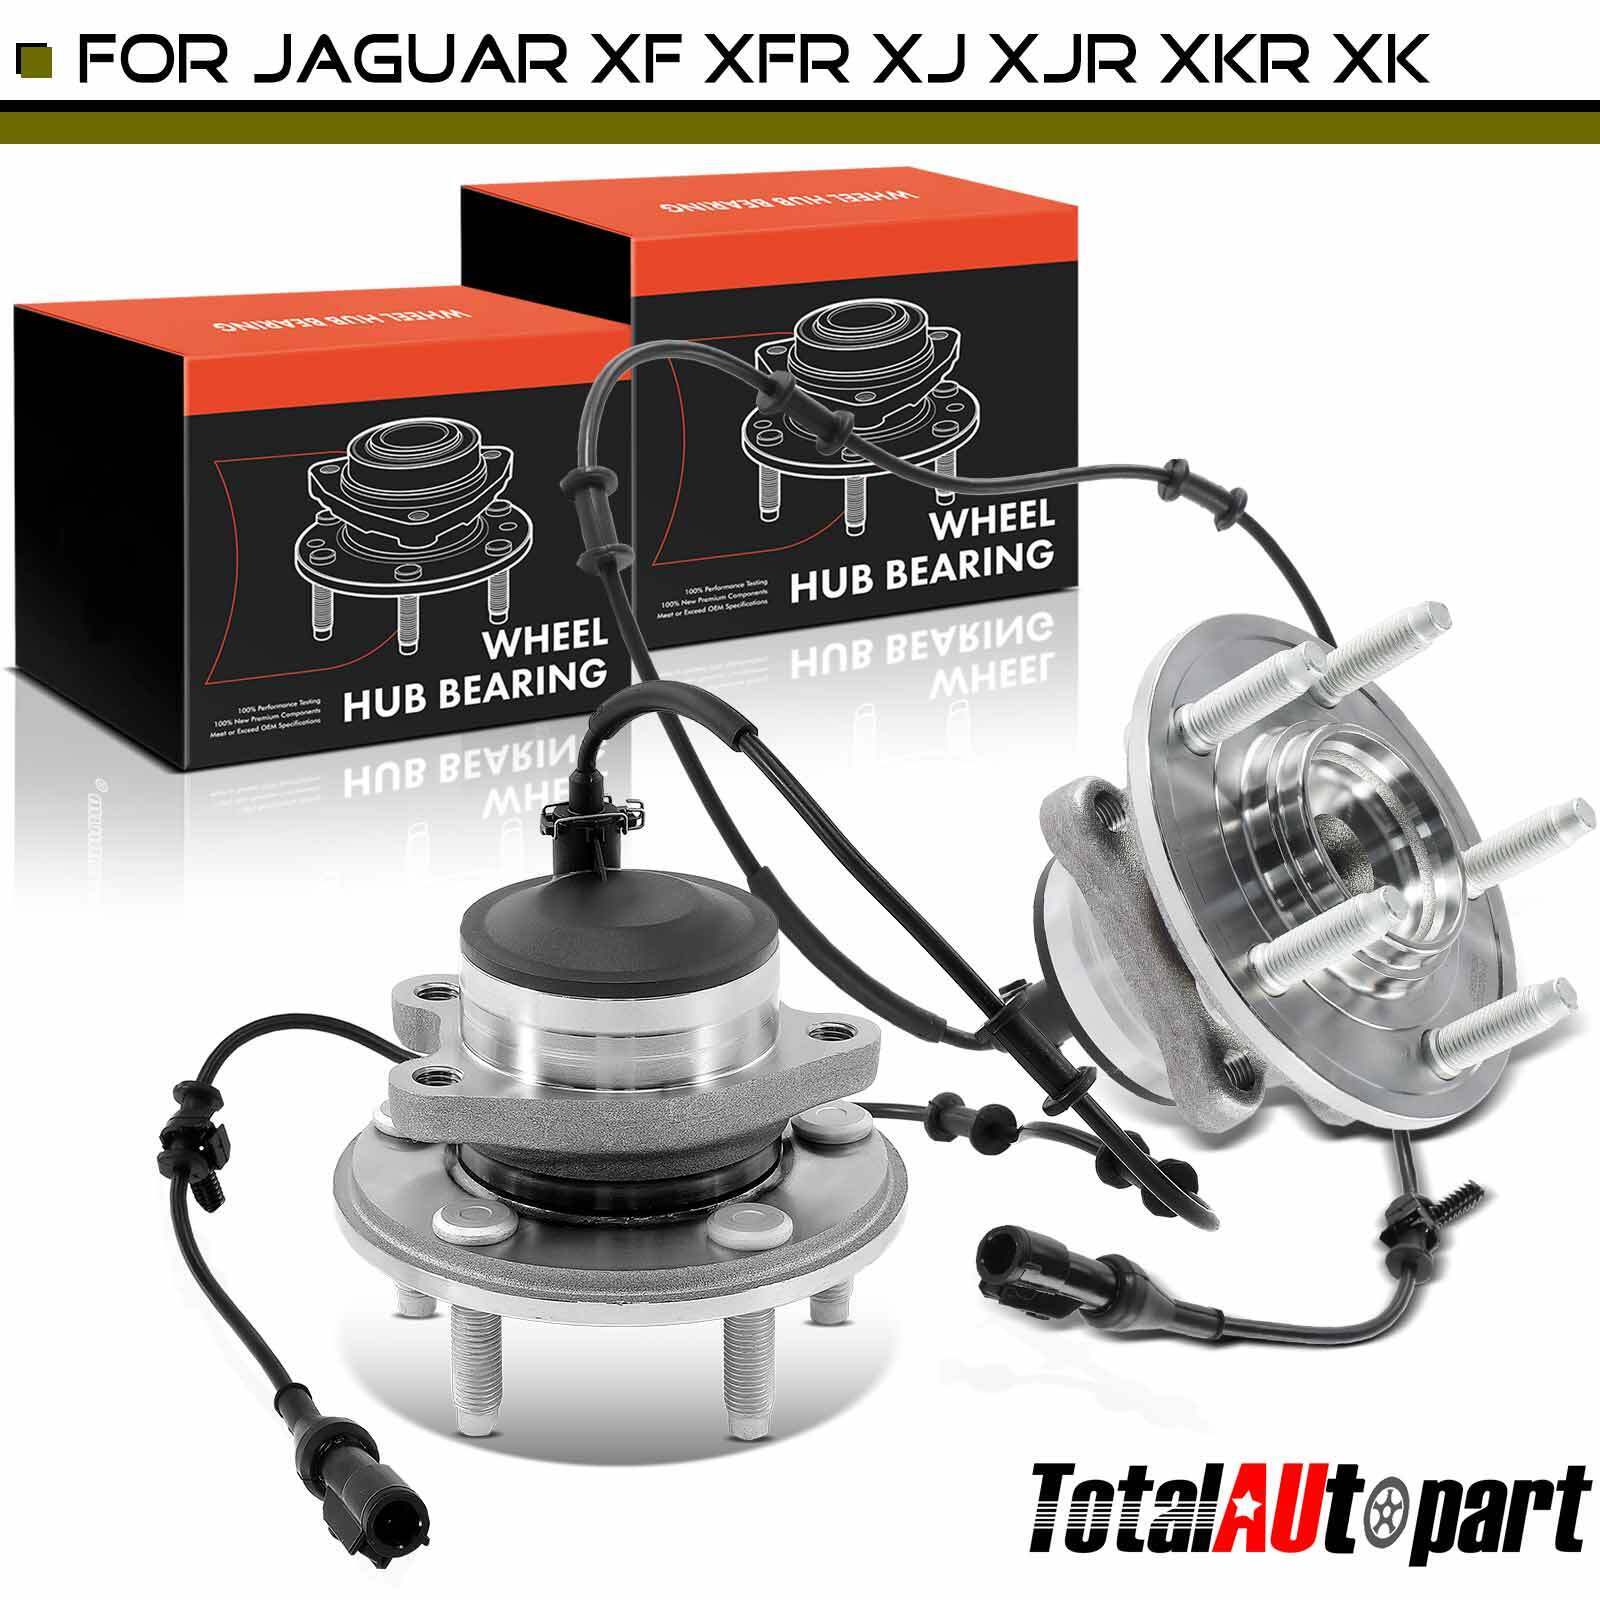 2x Wheel Hub Bearing Assembly for Jaguar XF XJ XK 2010-2018 Front Left & Right